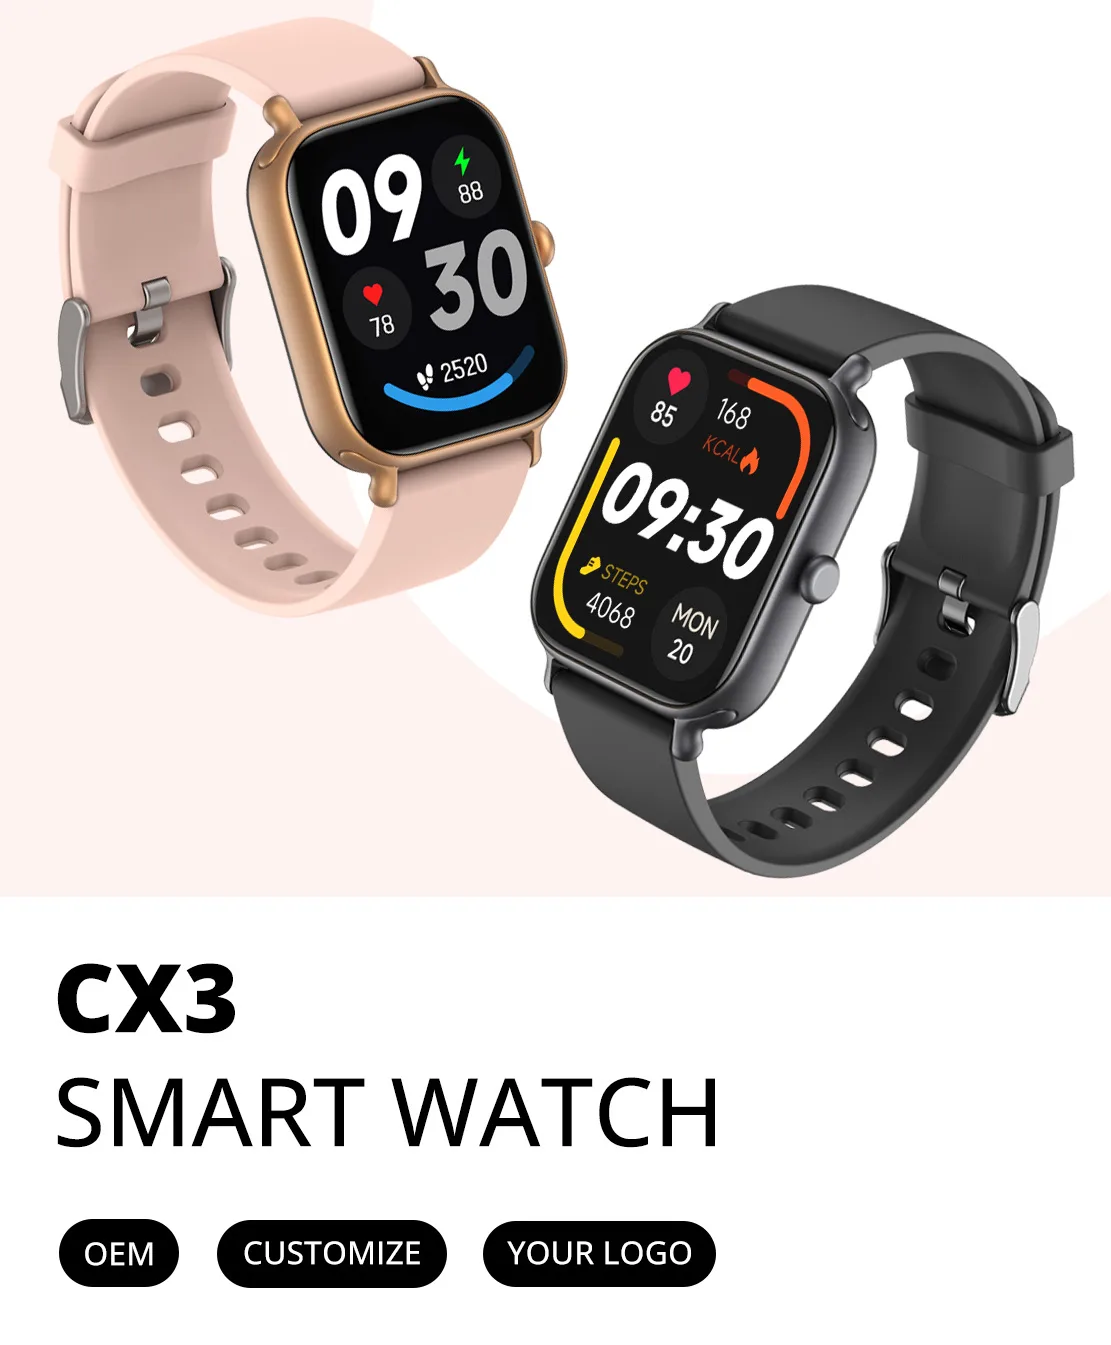 CX3 Smart Watch Hero Image-mob